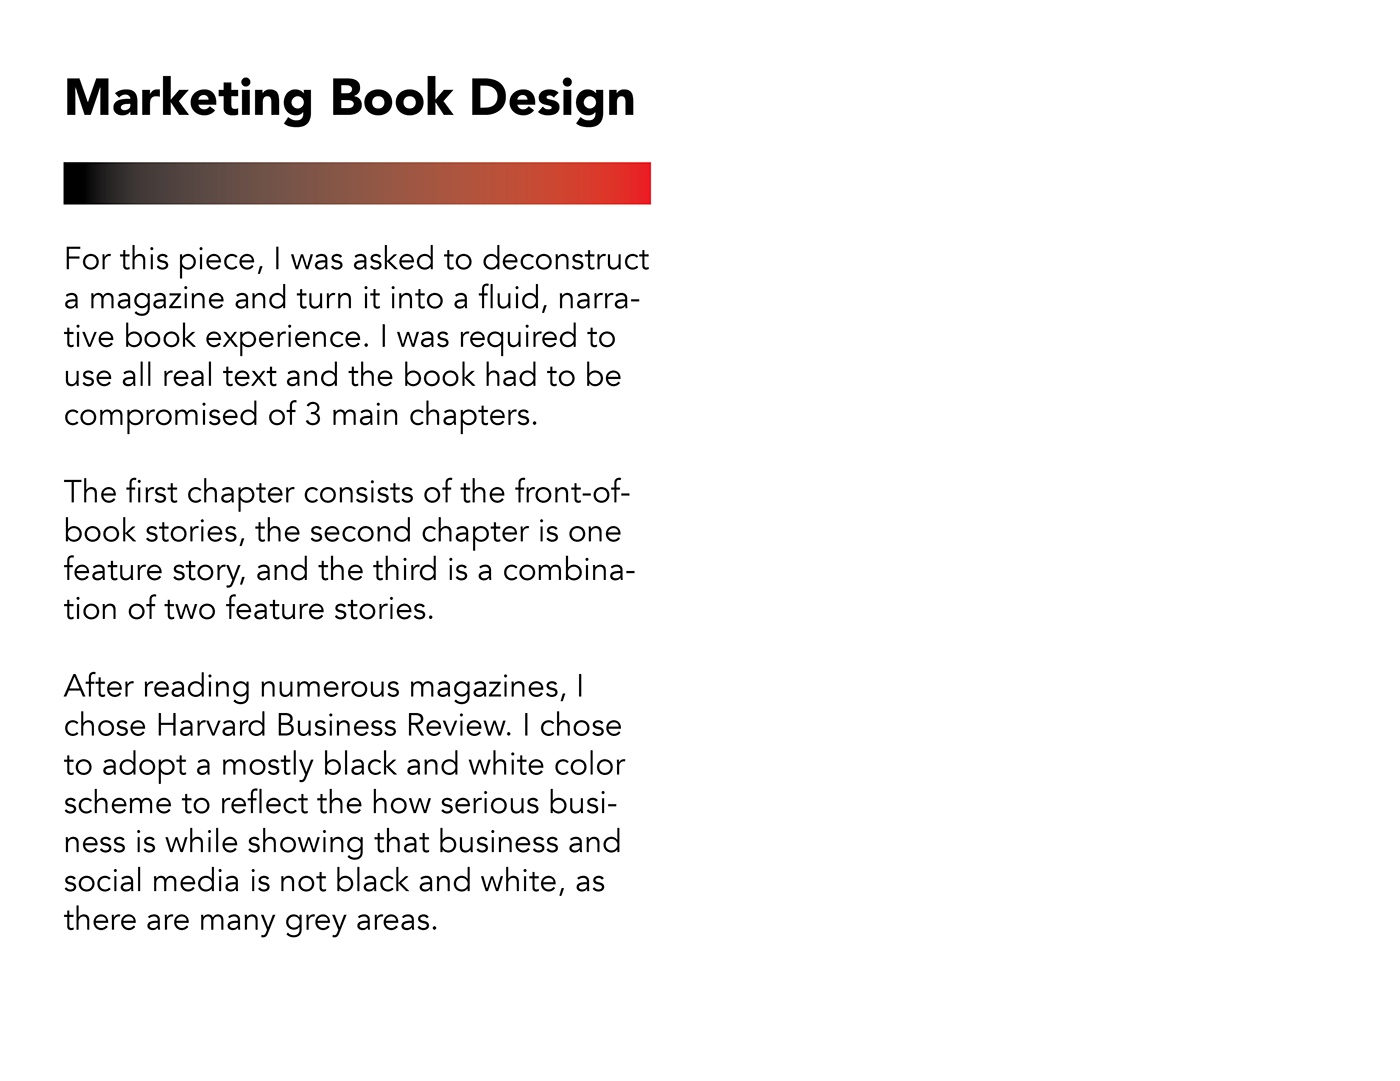 hbr harvard business review book design palatino MICA Roboto social media marketing   twitter facebook cool